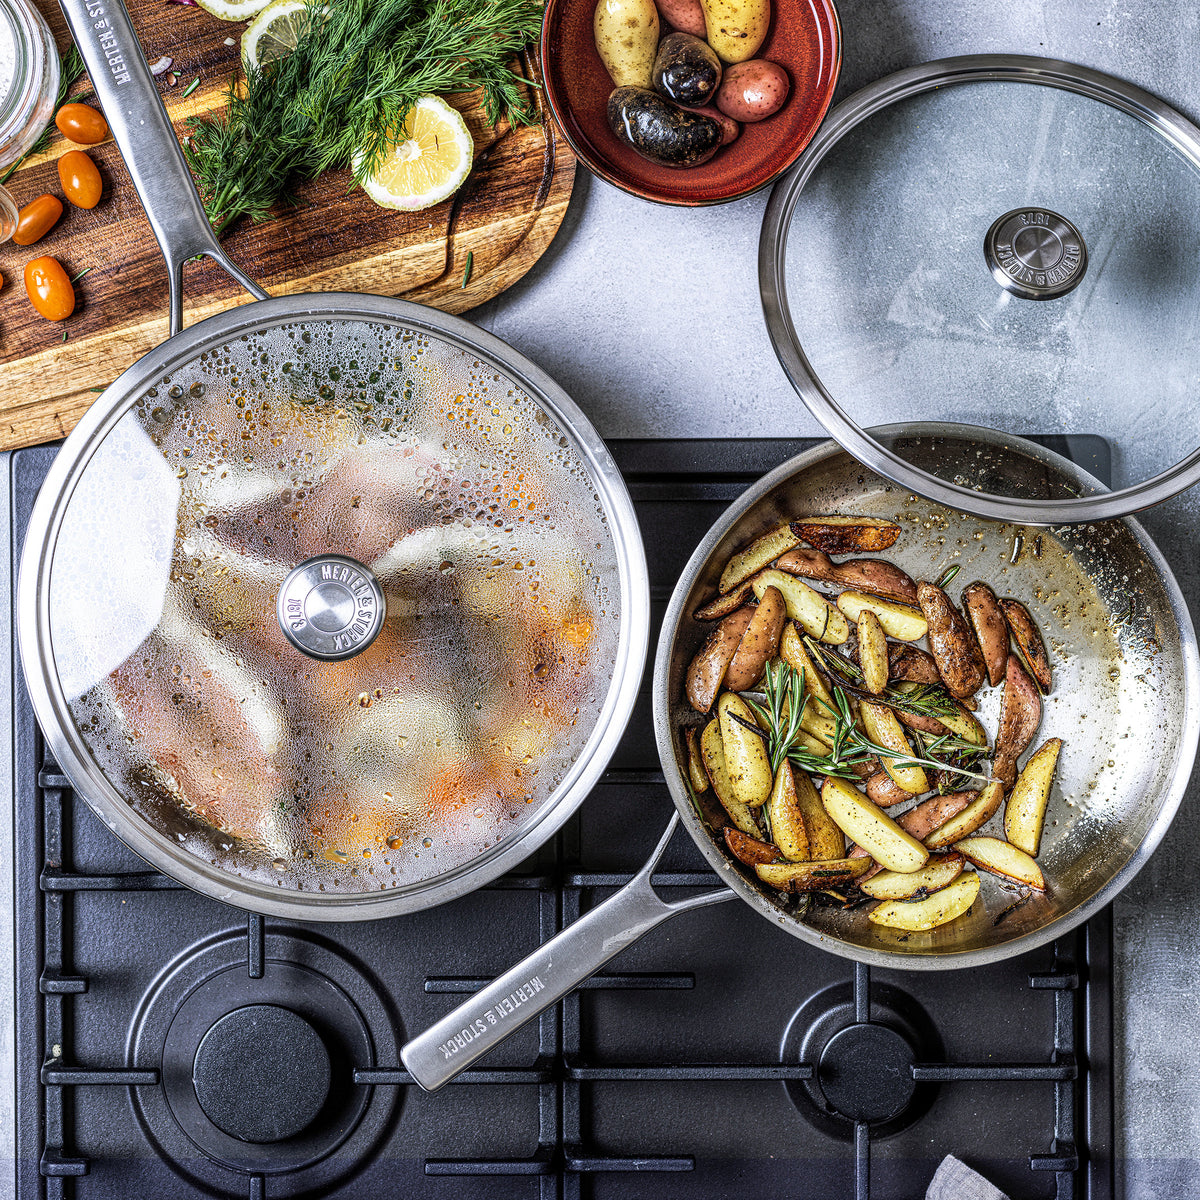 18 Pieces Stainless Steel Cookware Set Pots Sauce Pans Frying Pan